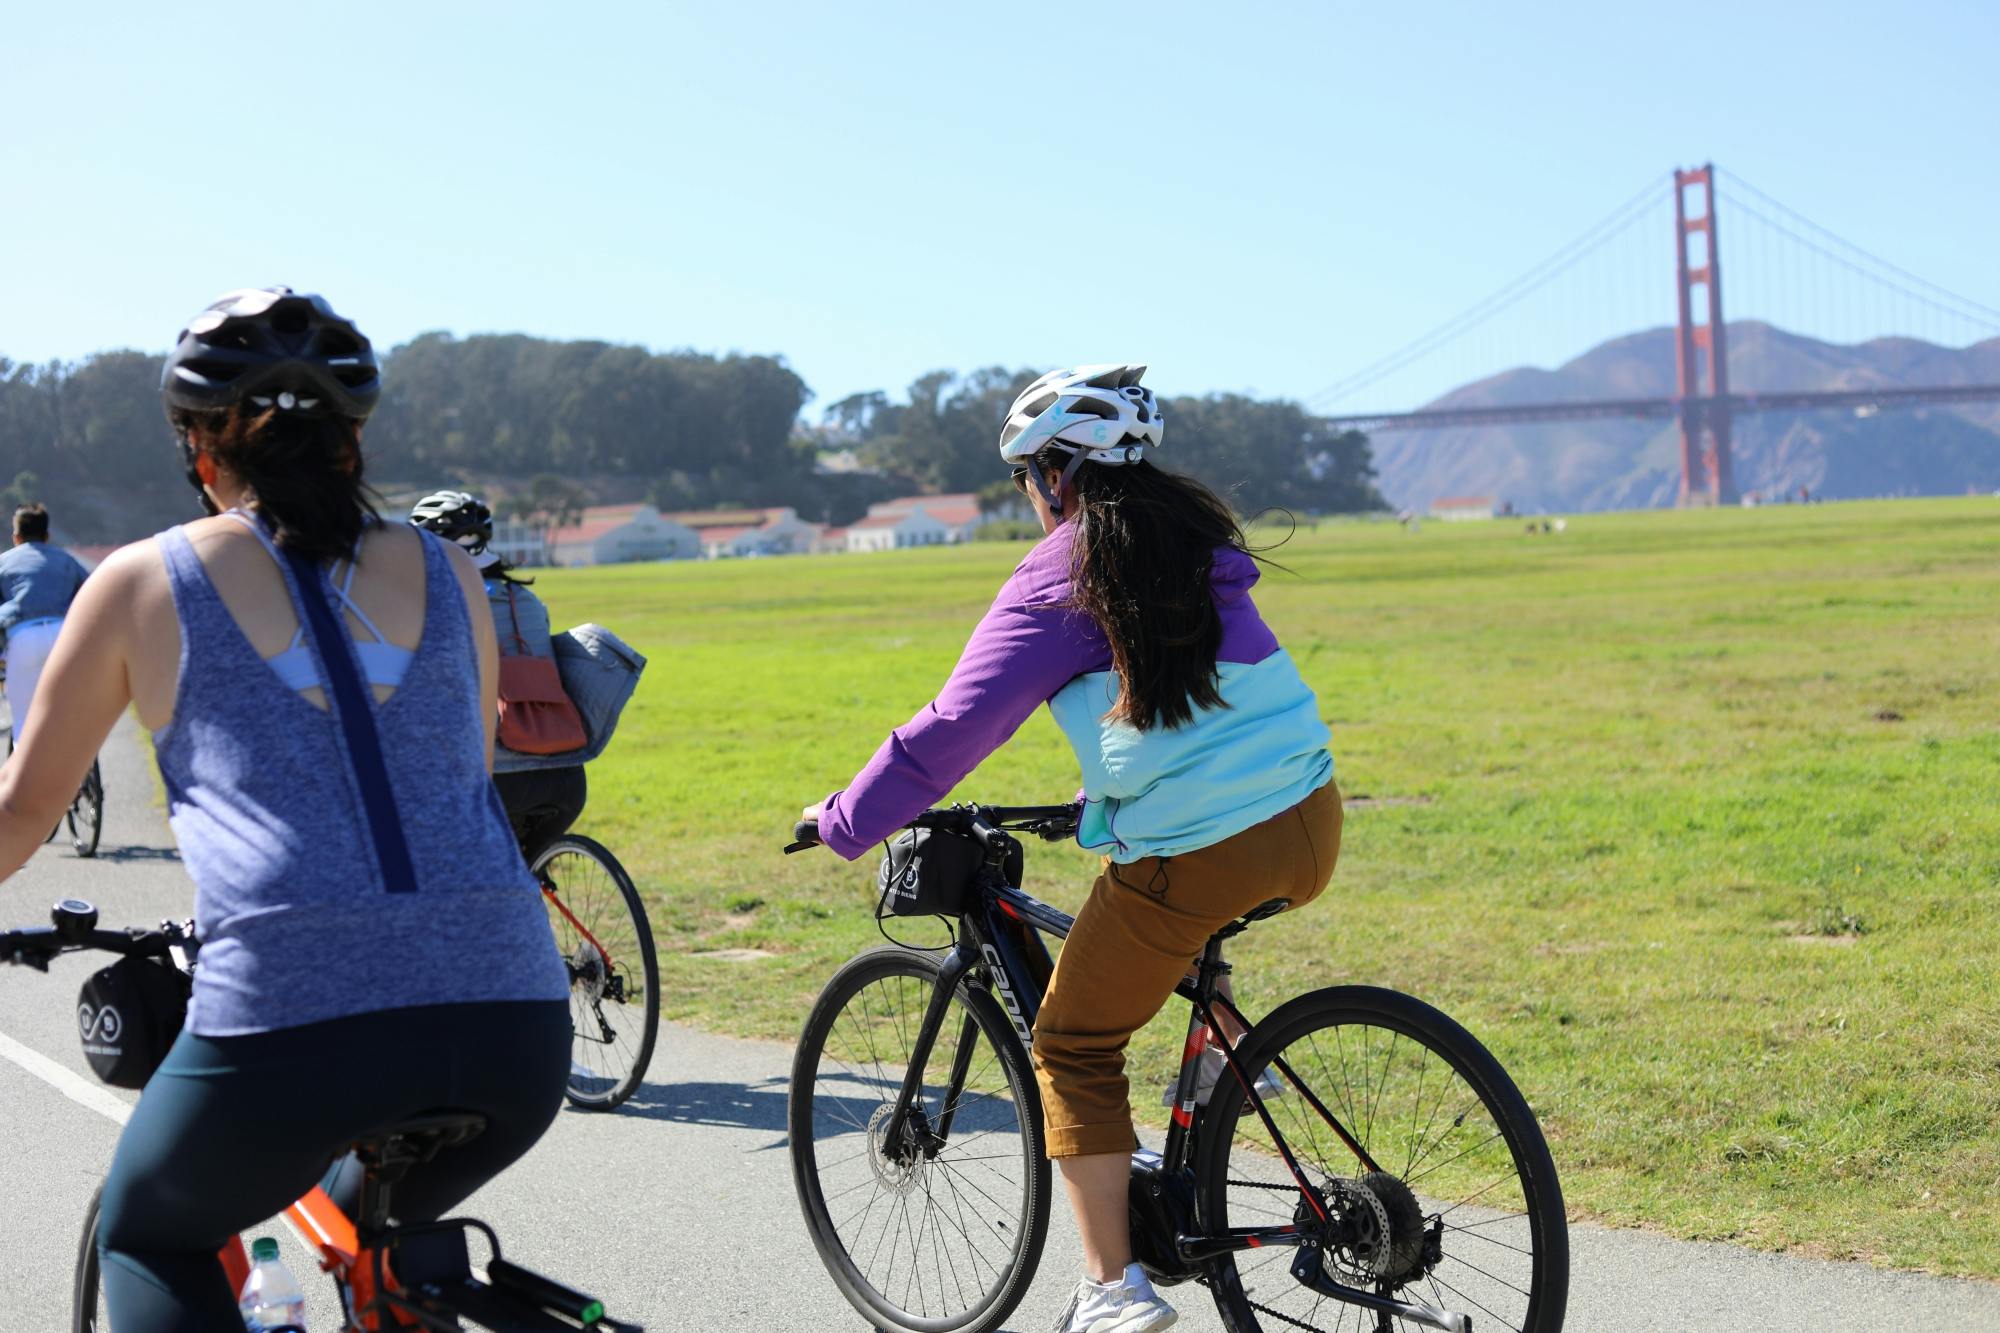 Highlights of Golden Gate Park guided bike tour